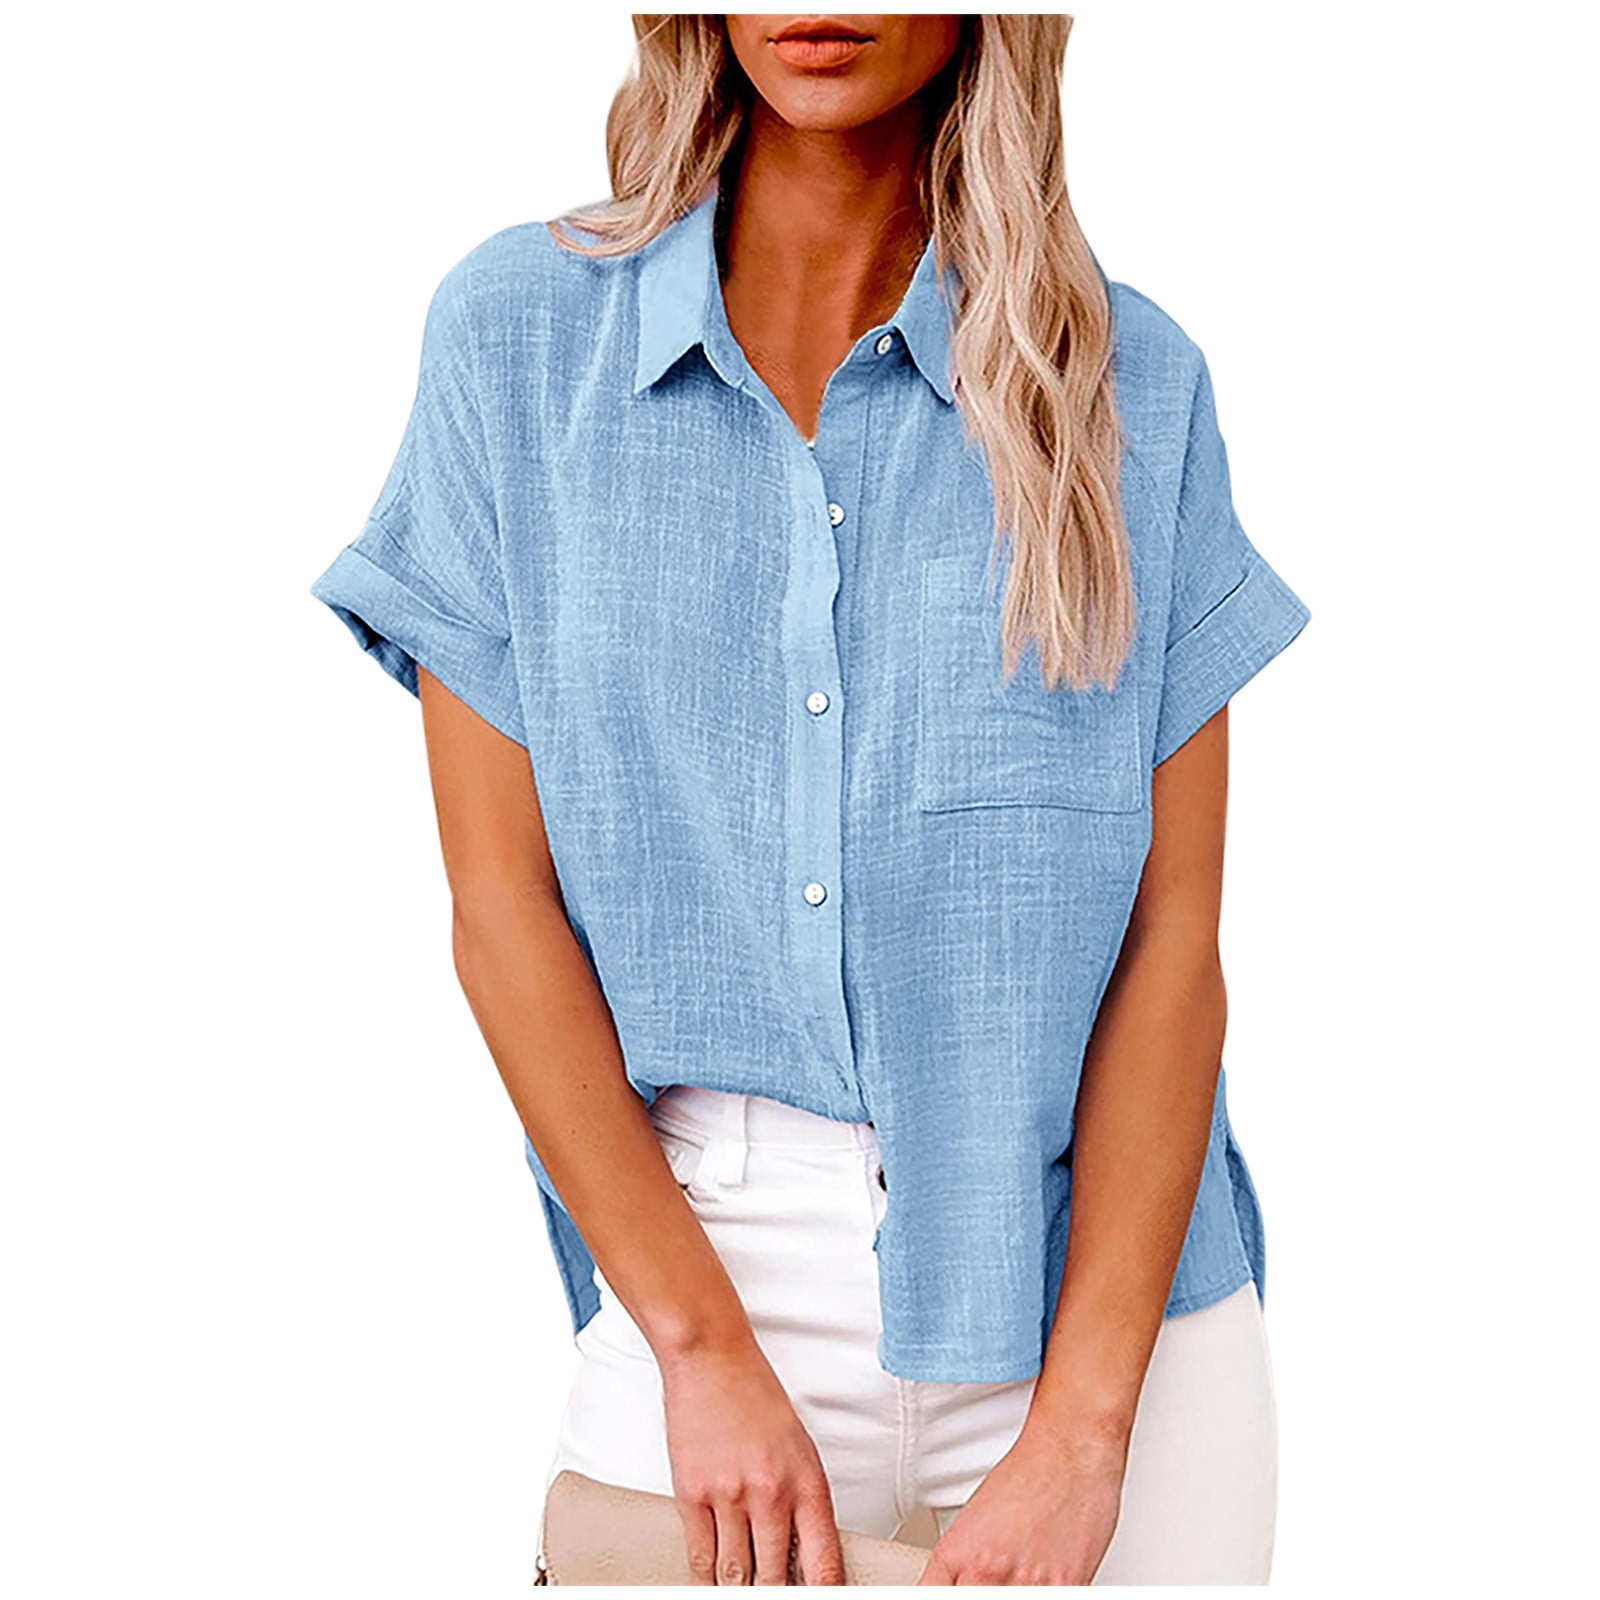 Summer Savings Clearance! Wenyuyu Cotton Linen Shirts for Women Loose ...